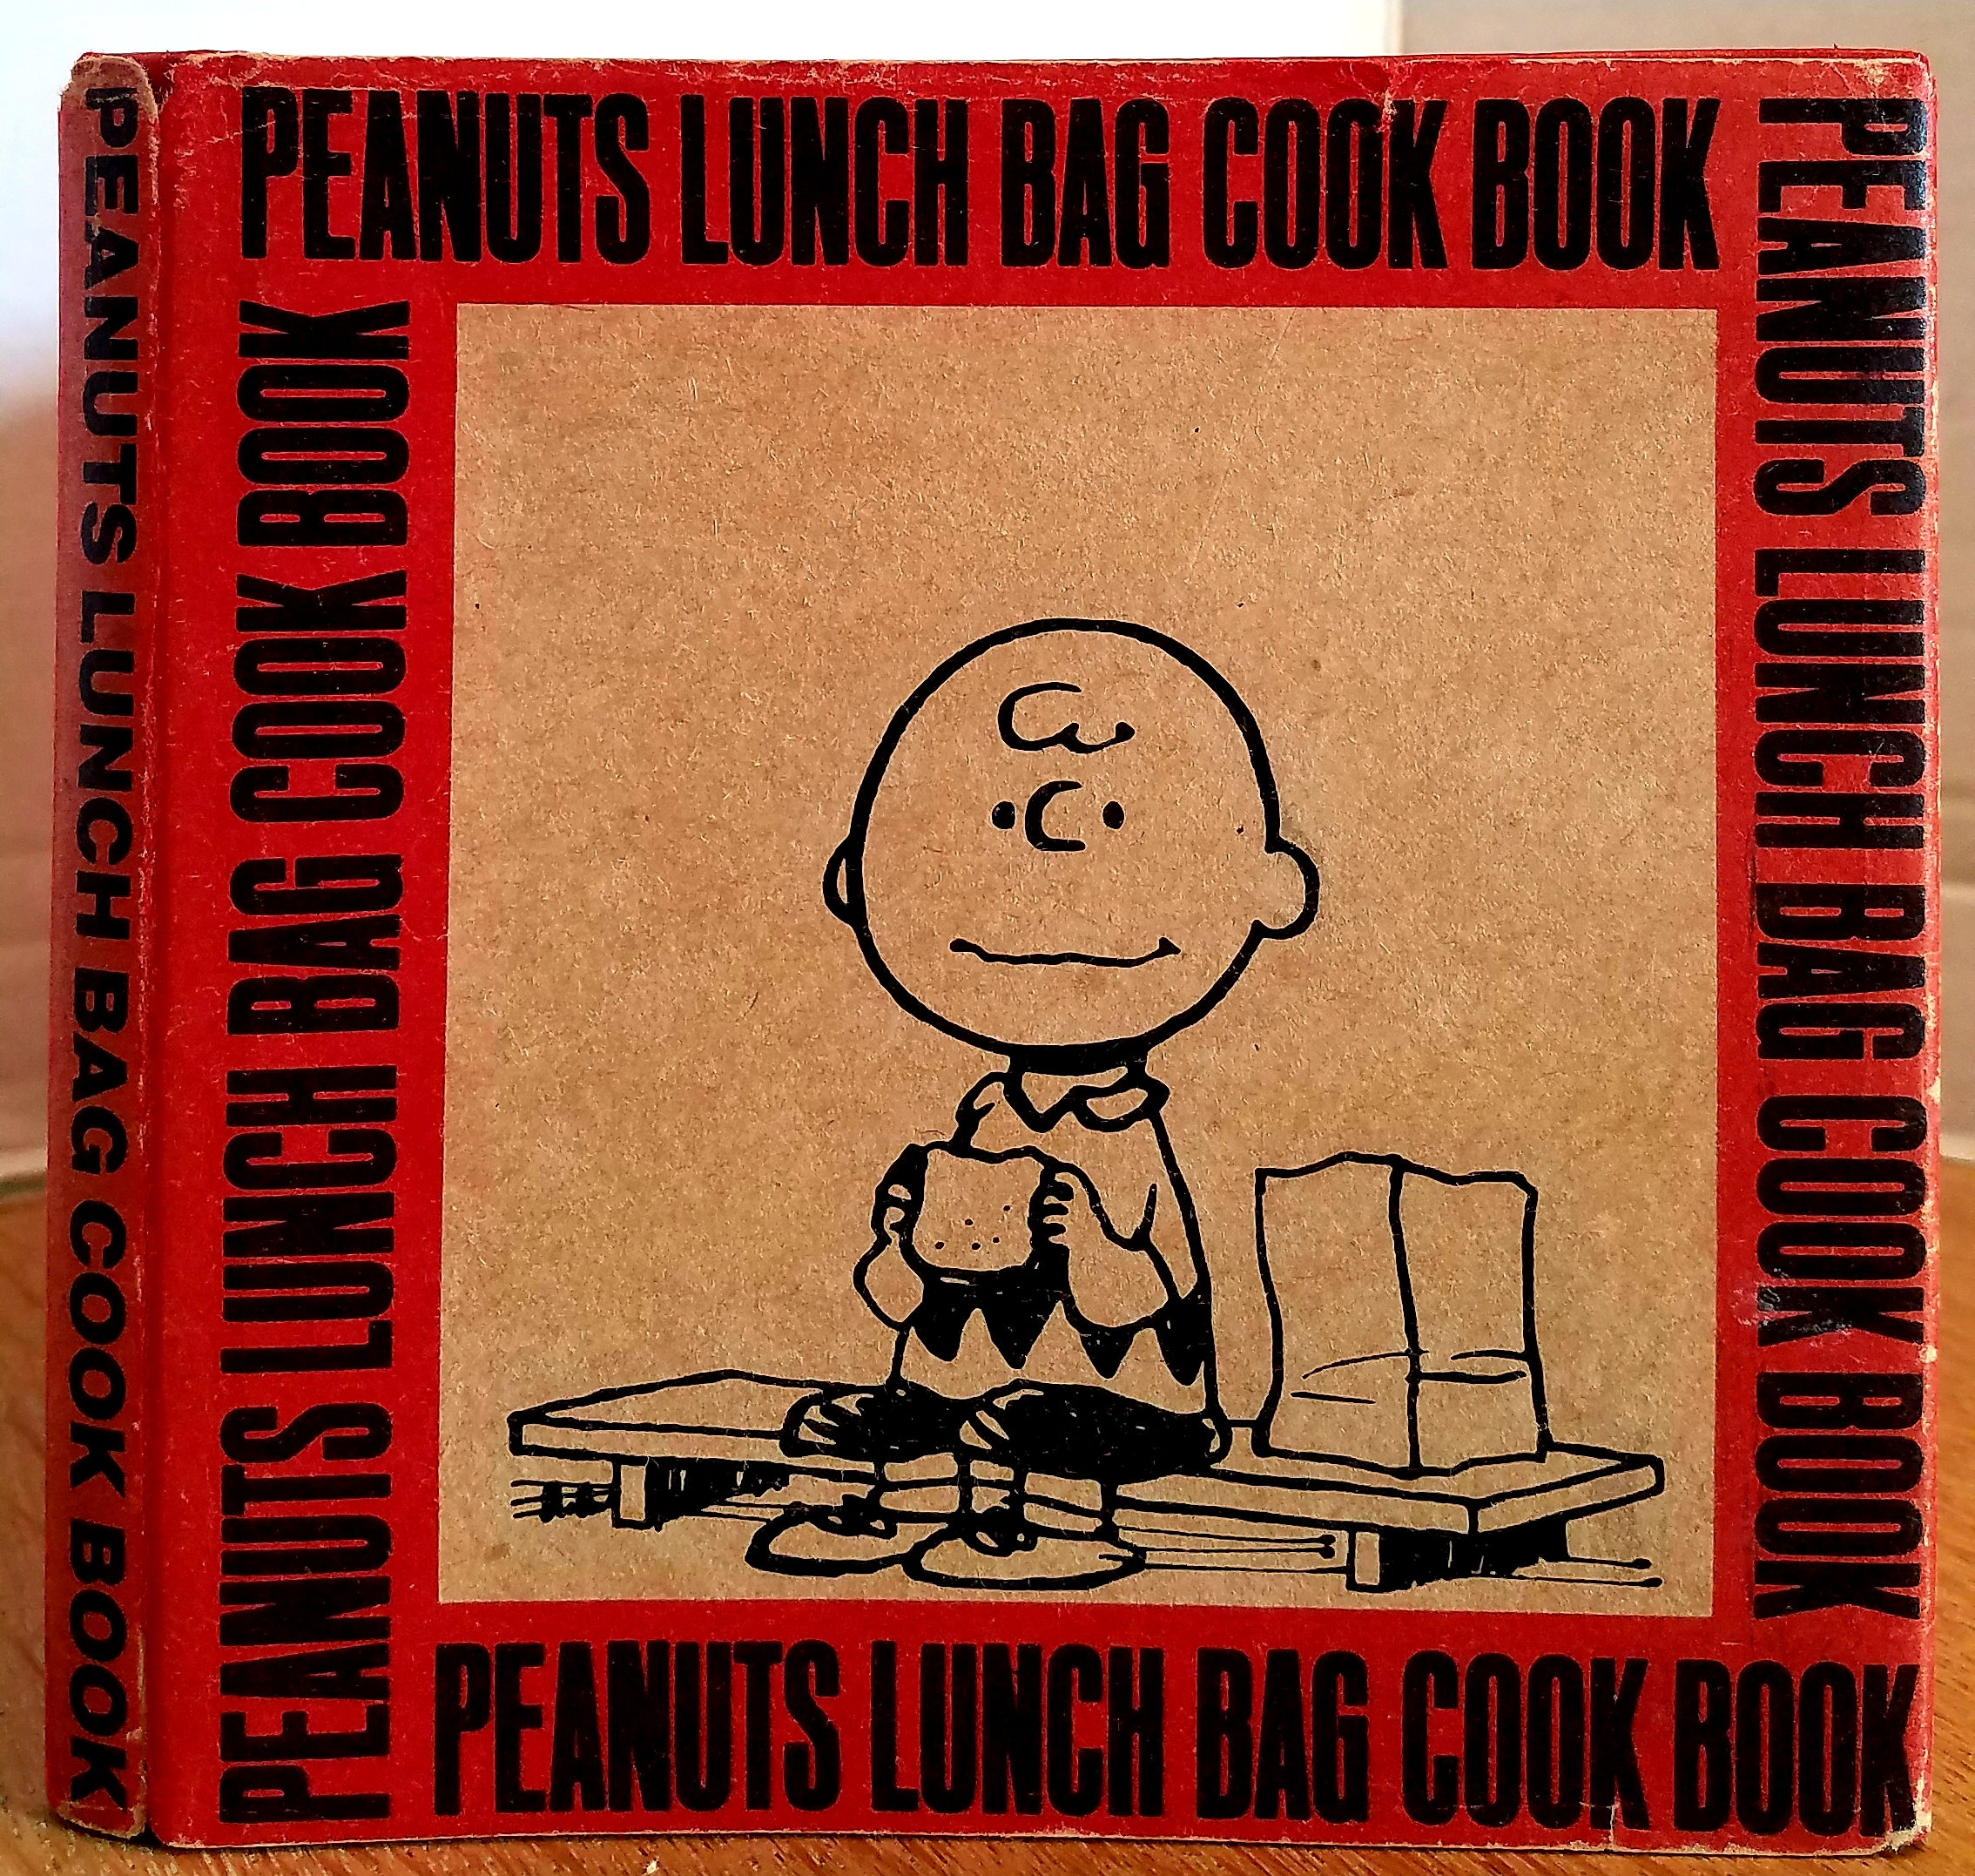 Peanuts Lunch Bag Cook Book スヌーピー - 通販 - gofukuyasan.com